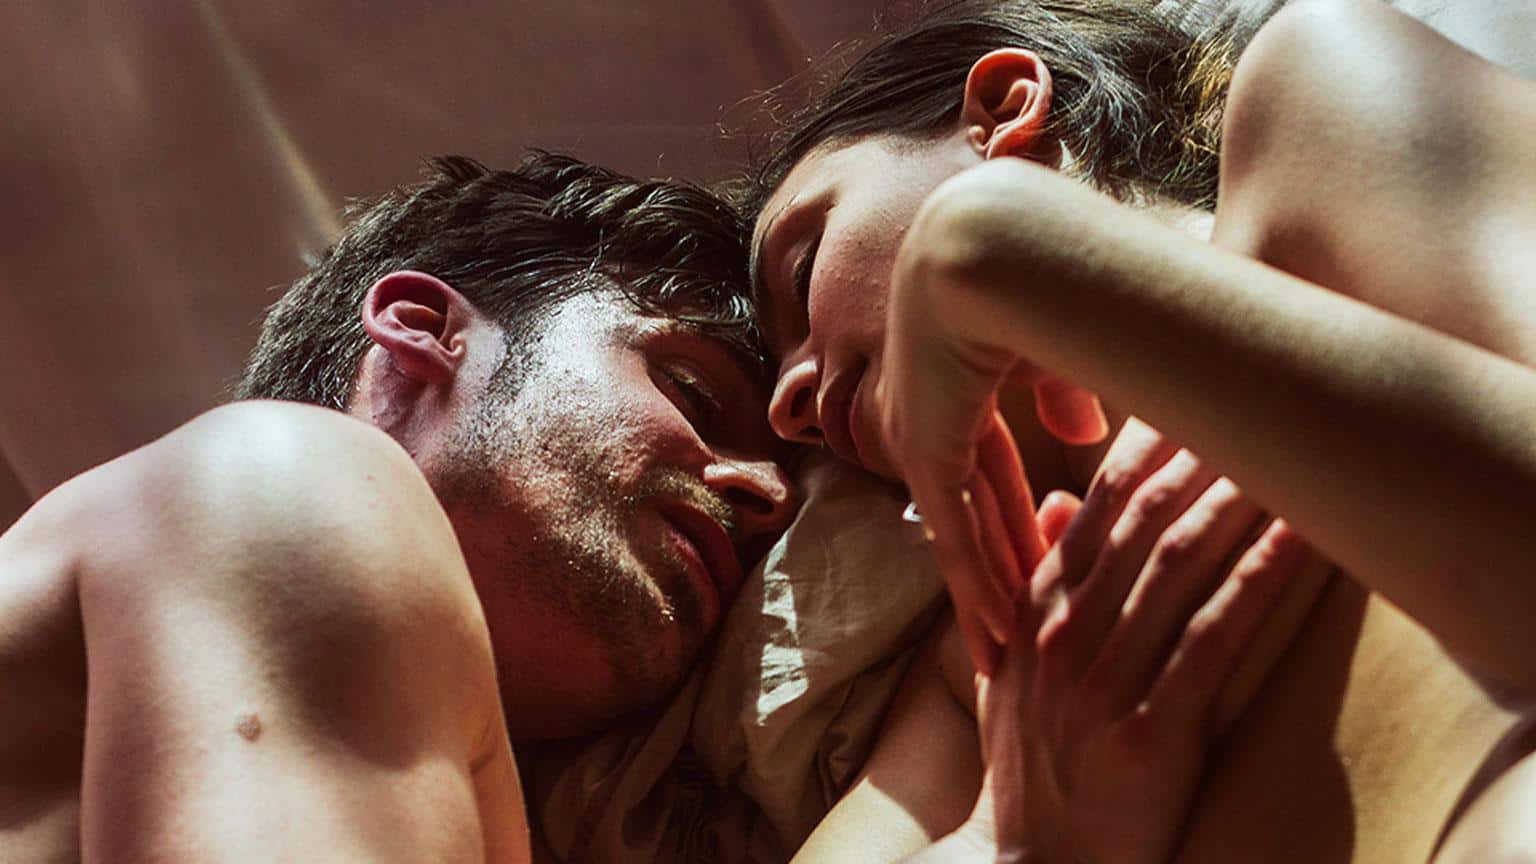 XCONFESSIONS NIGHT 2020 Film Erotik News Kritik Trailer